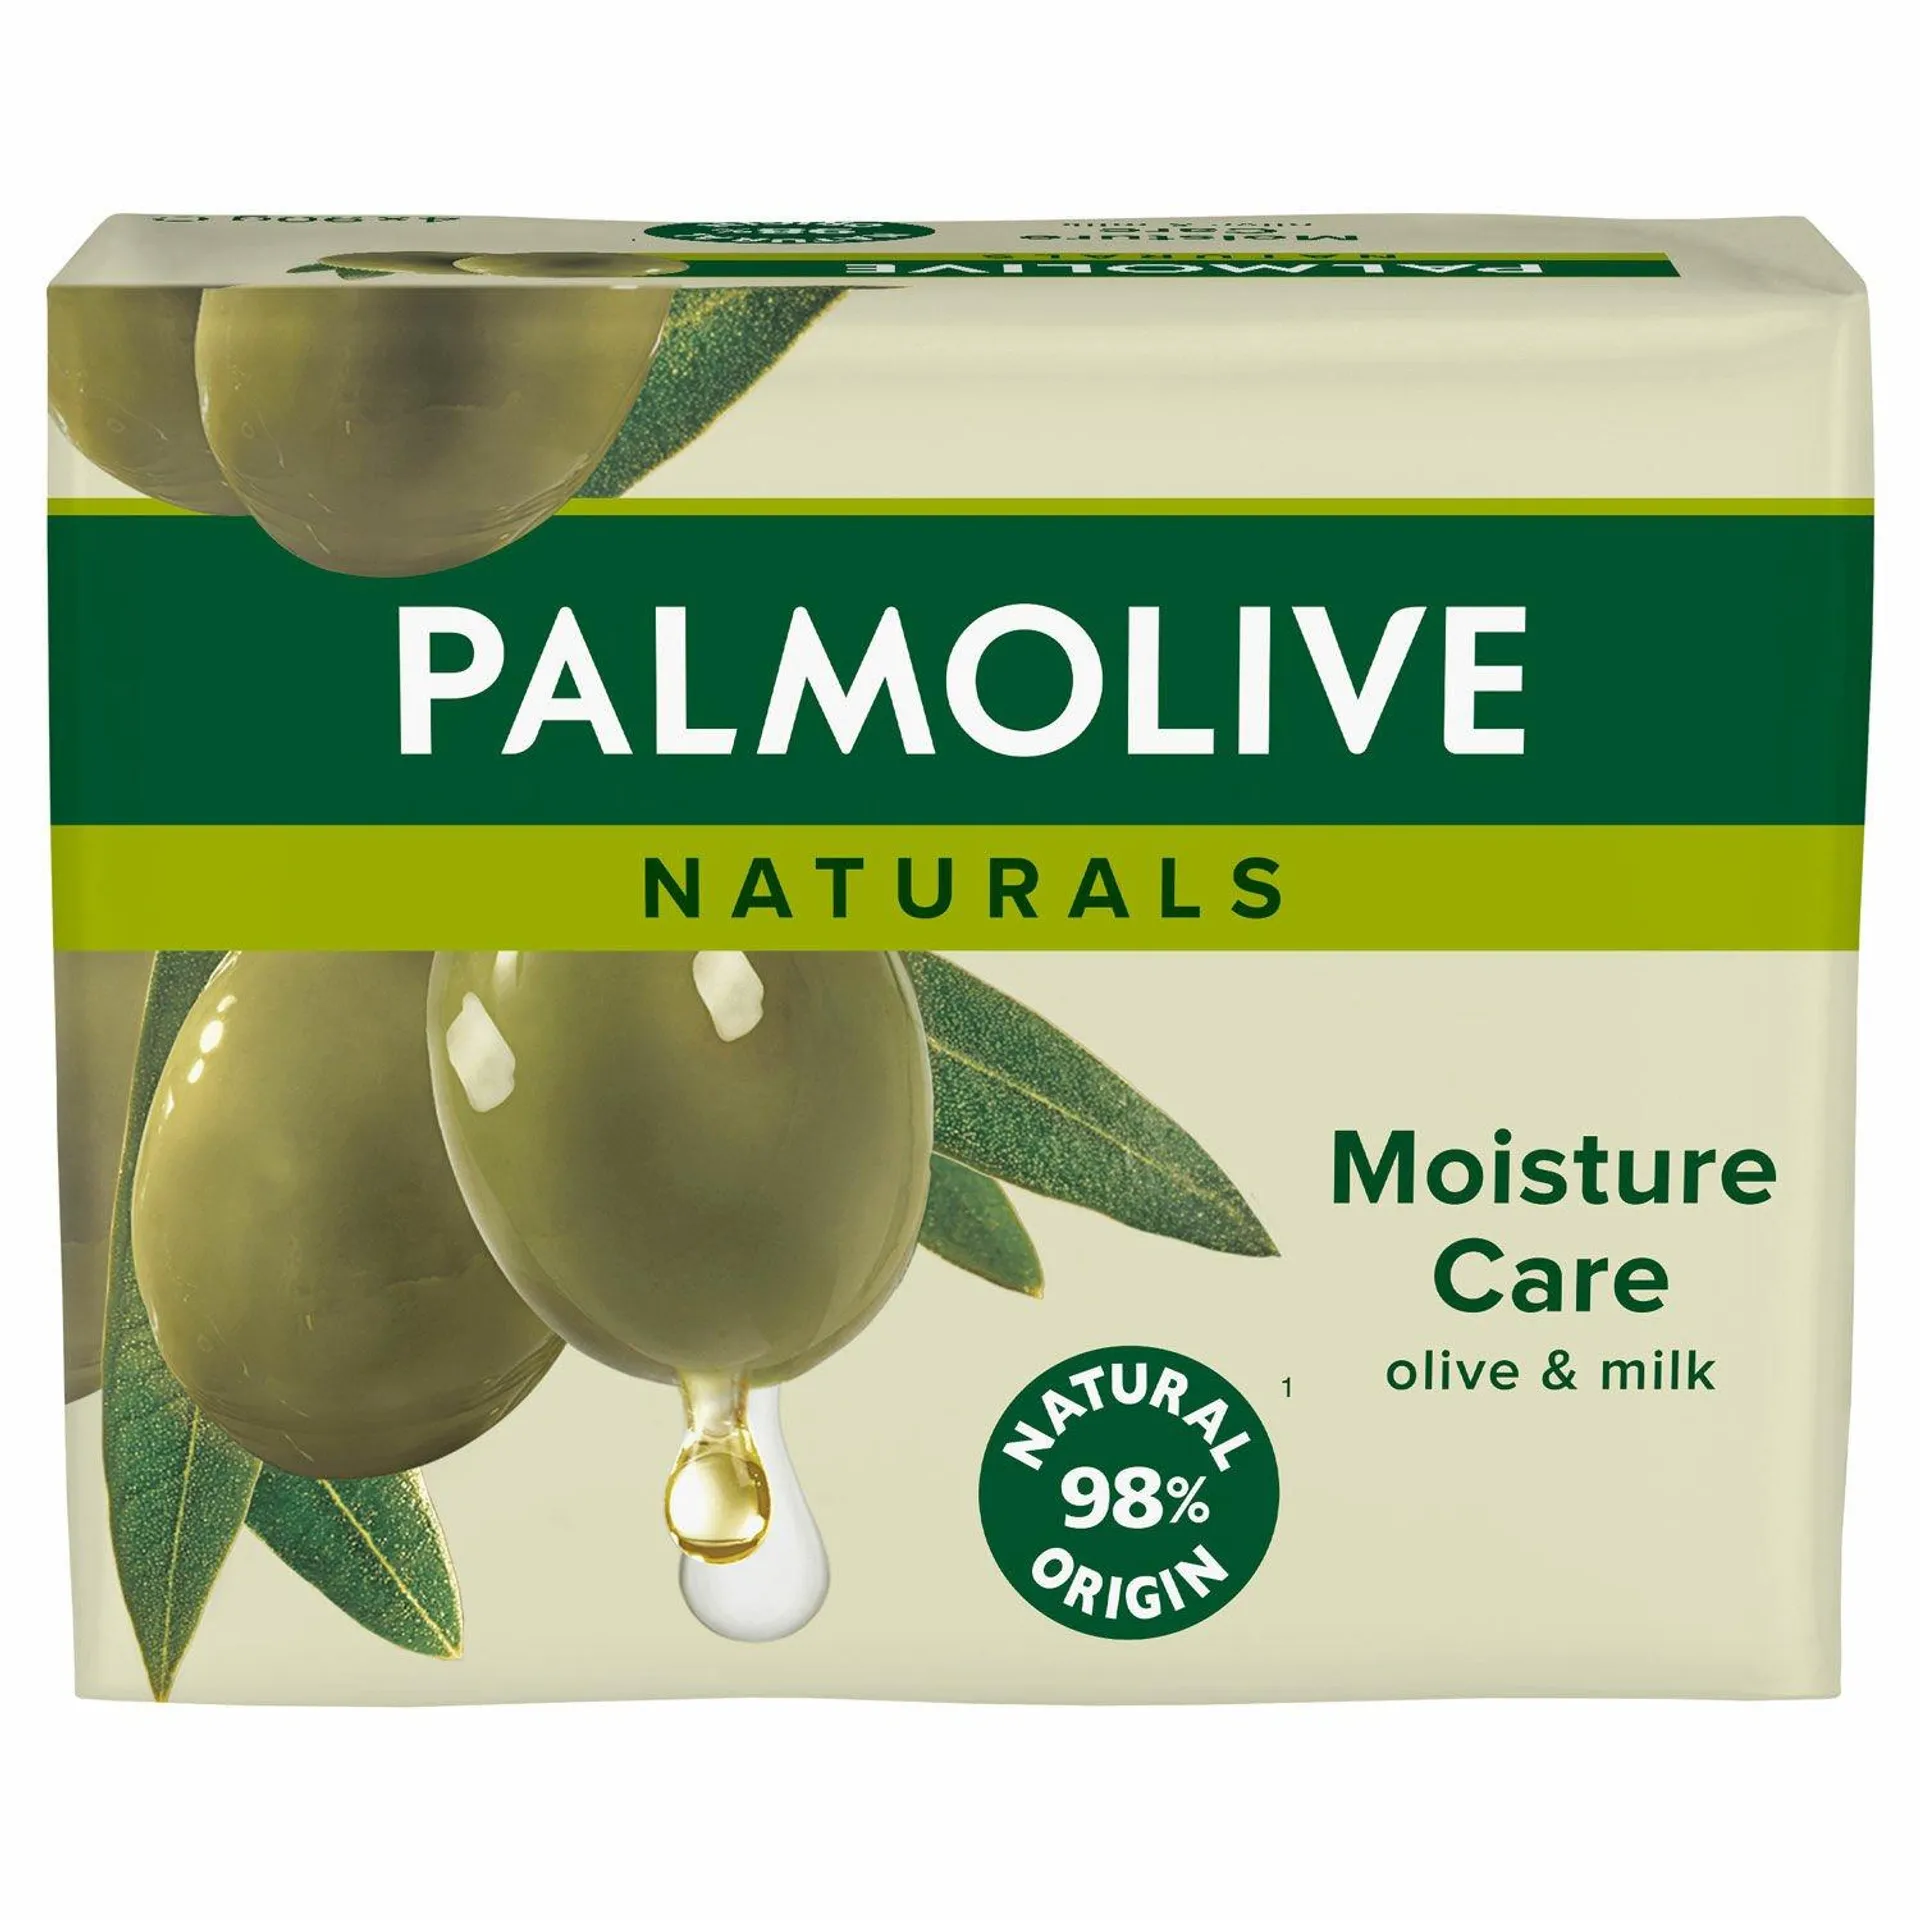 Fast tvål Palmolive Naturals Original